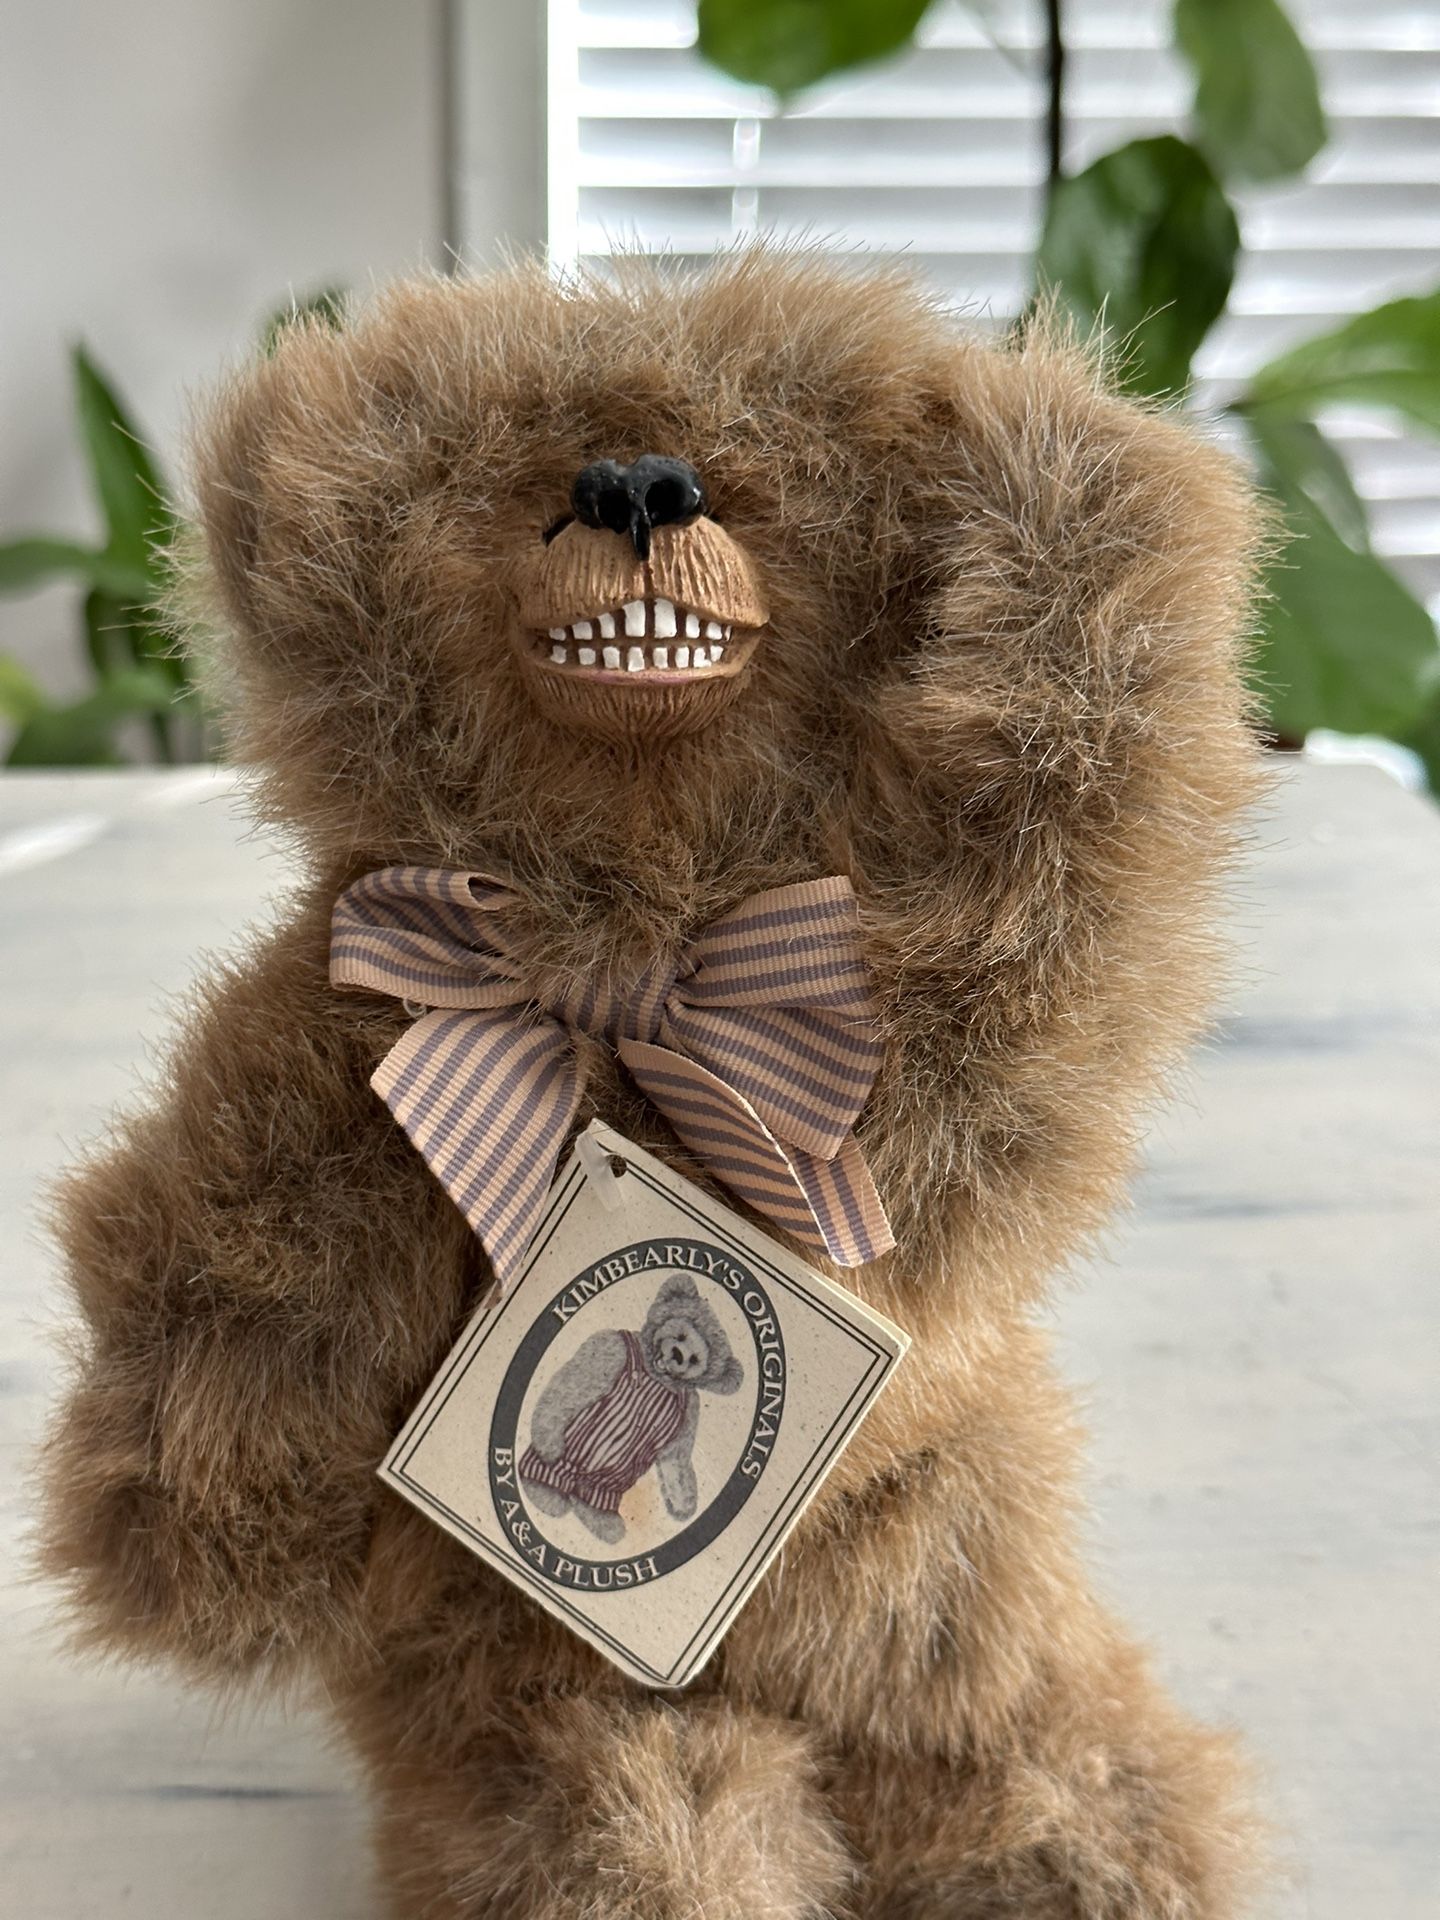 VNTG Kimberly’s Originals Butch Jointed Teddy Bear Handmade Resin Face Mint